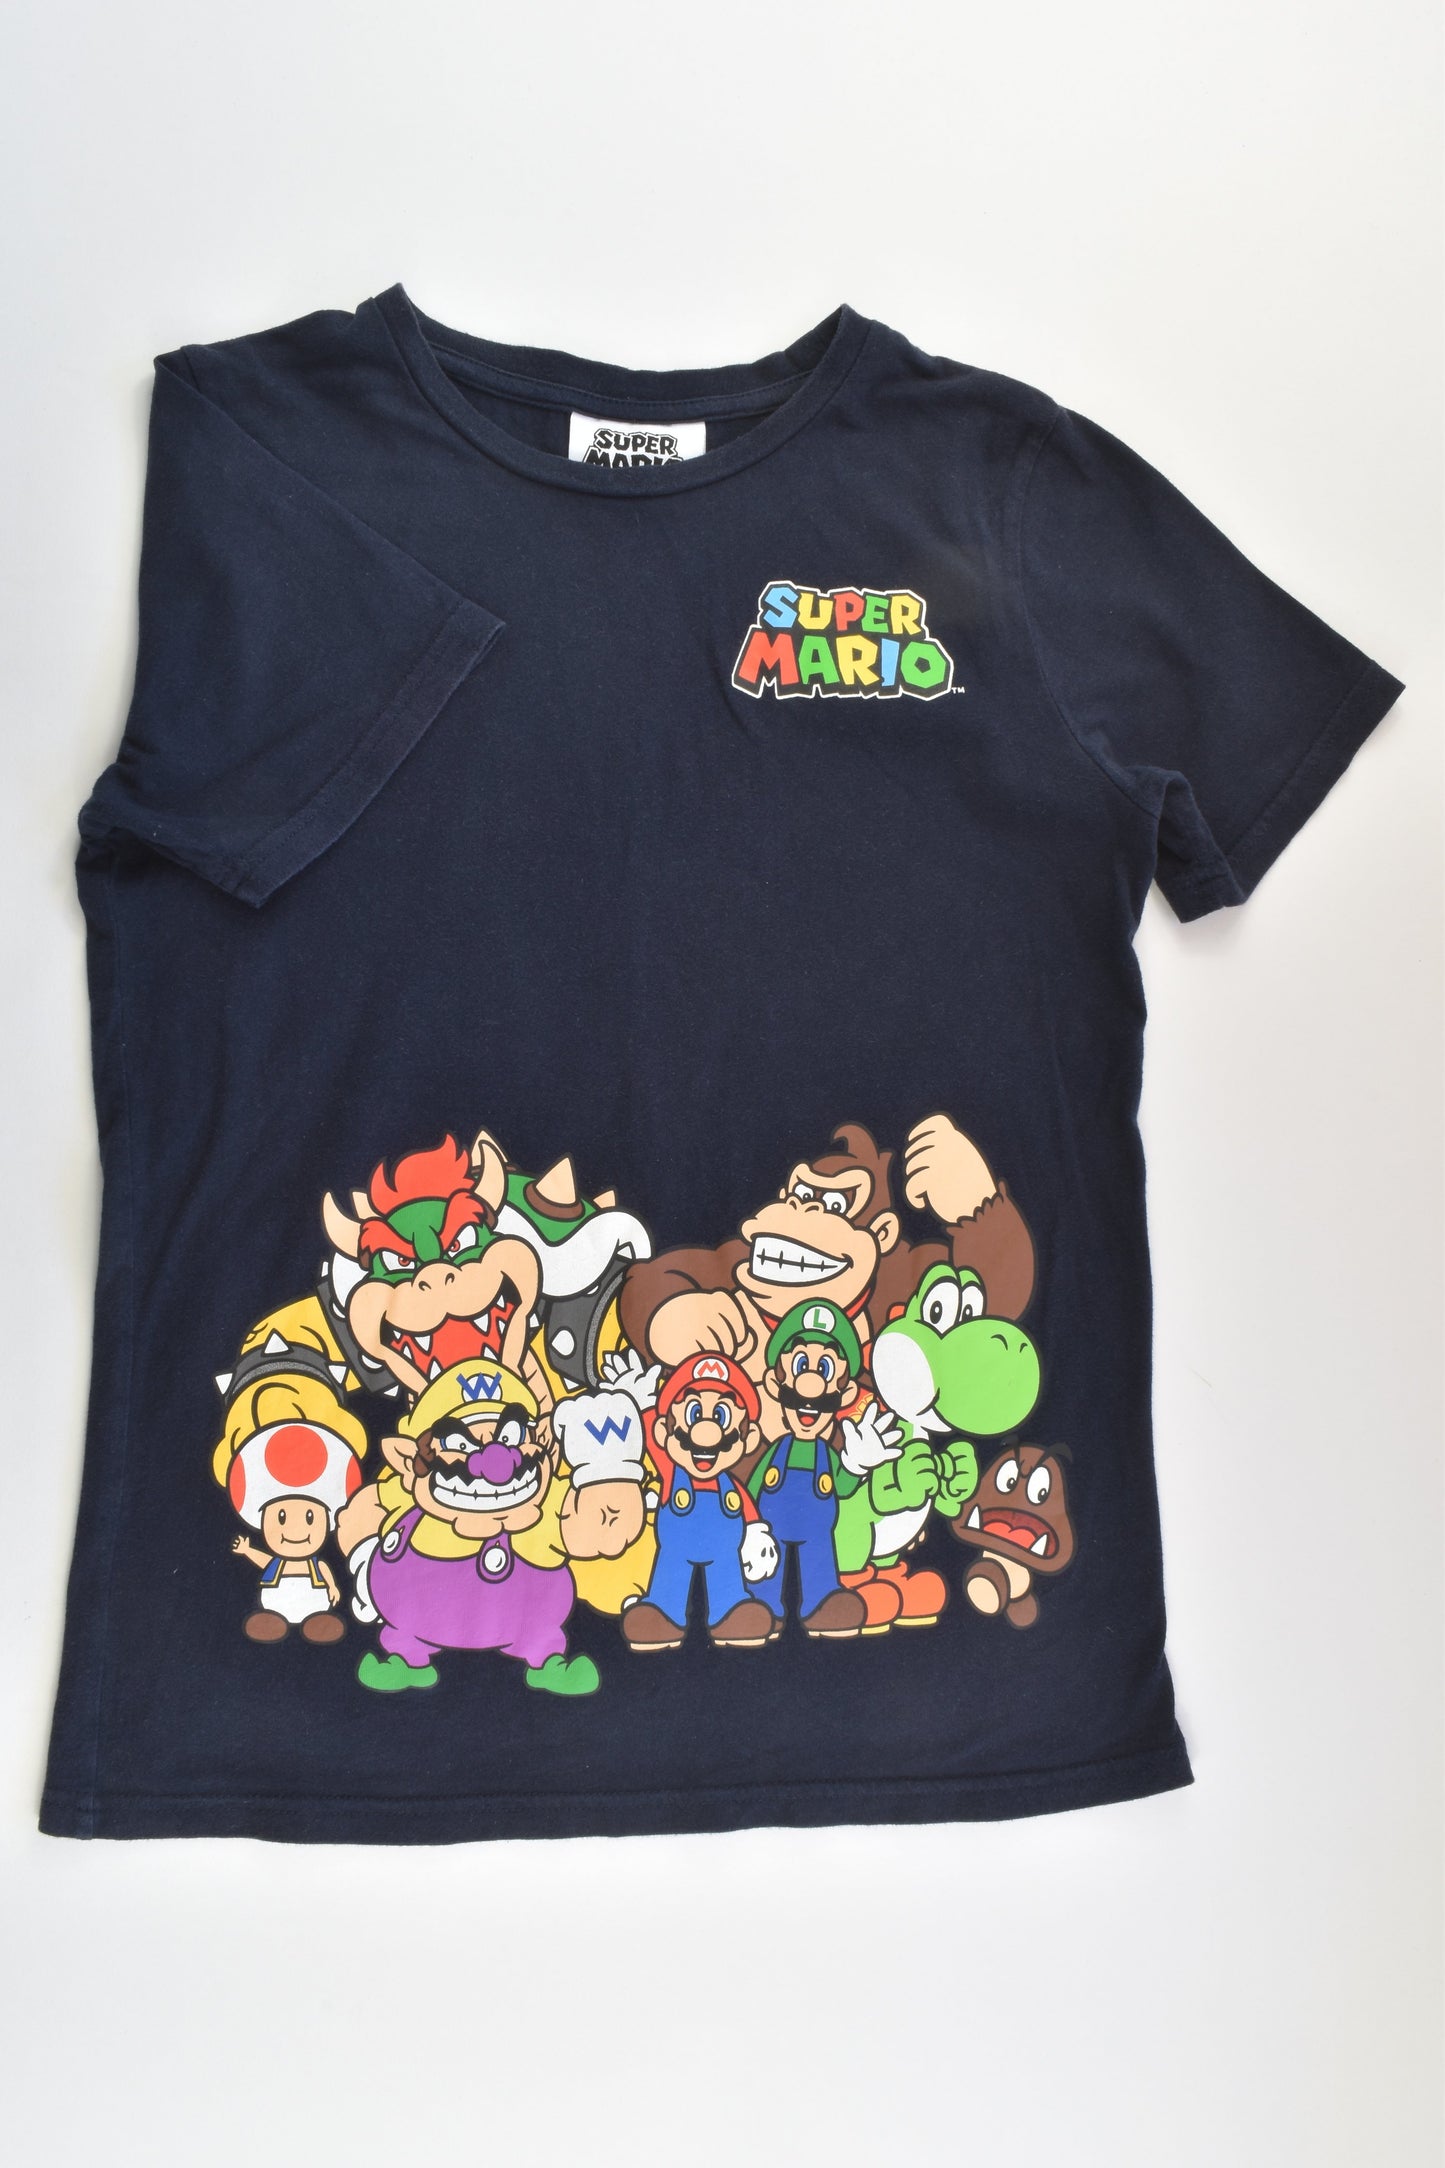 Super Mario Size 12 T-shirt